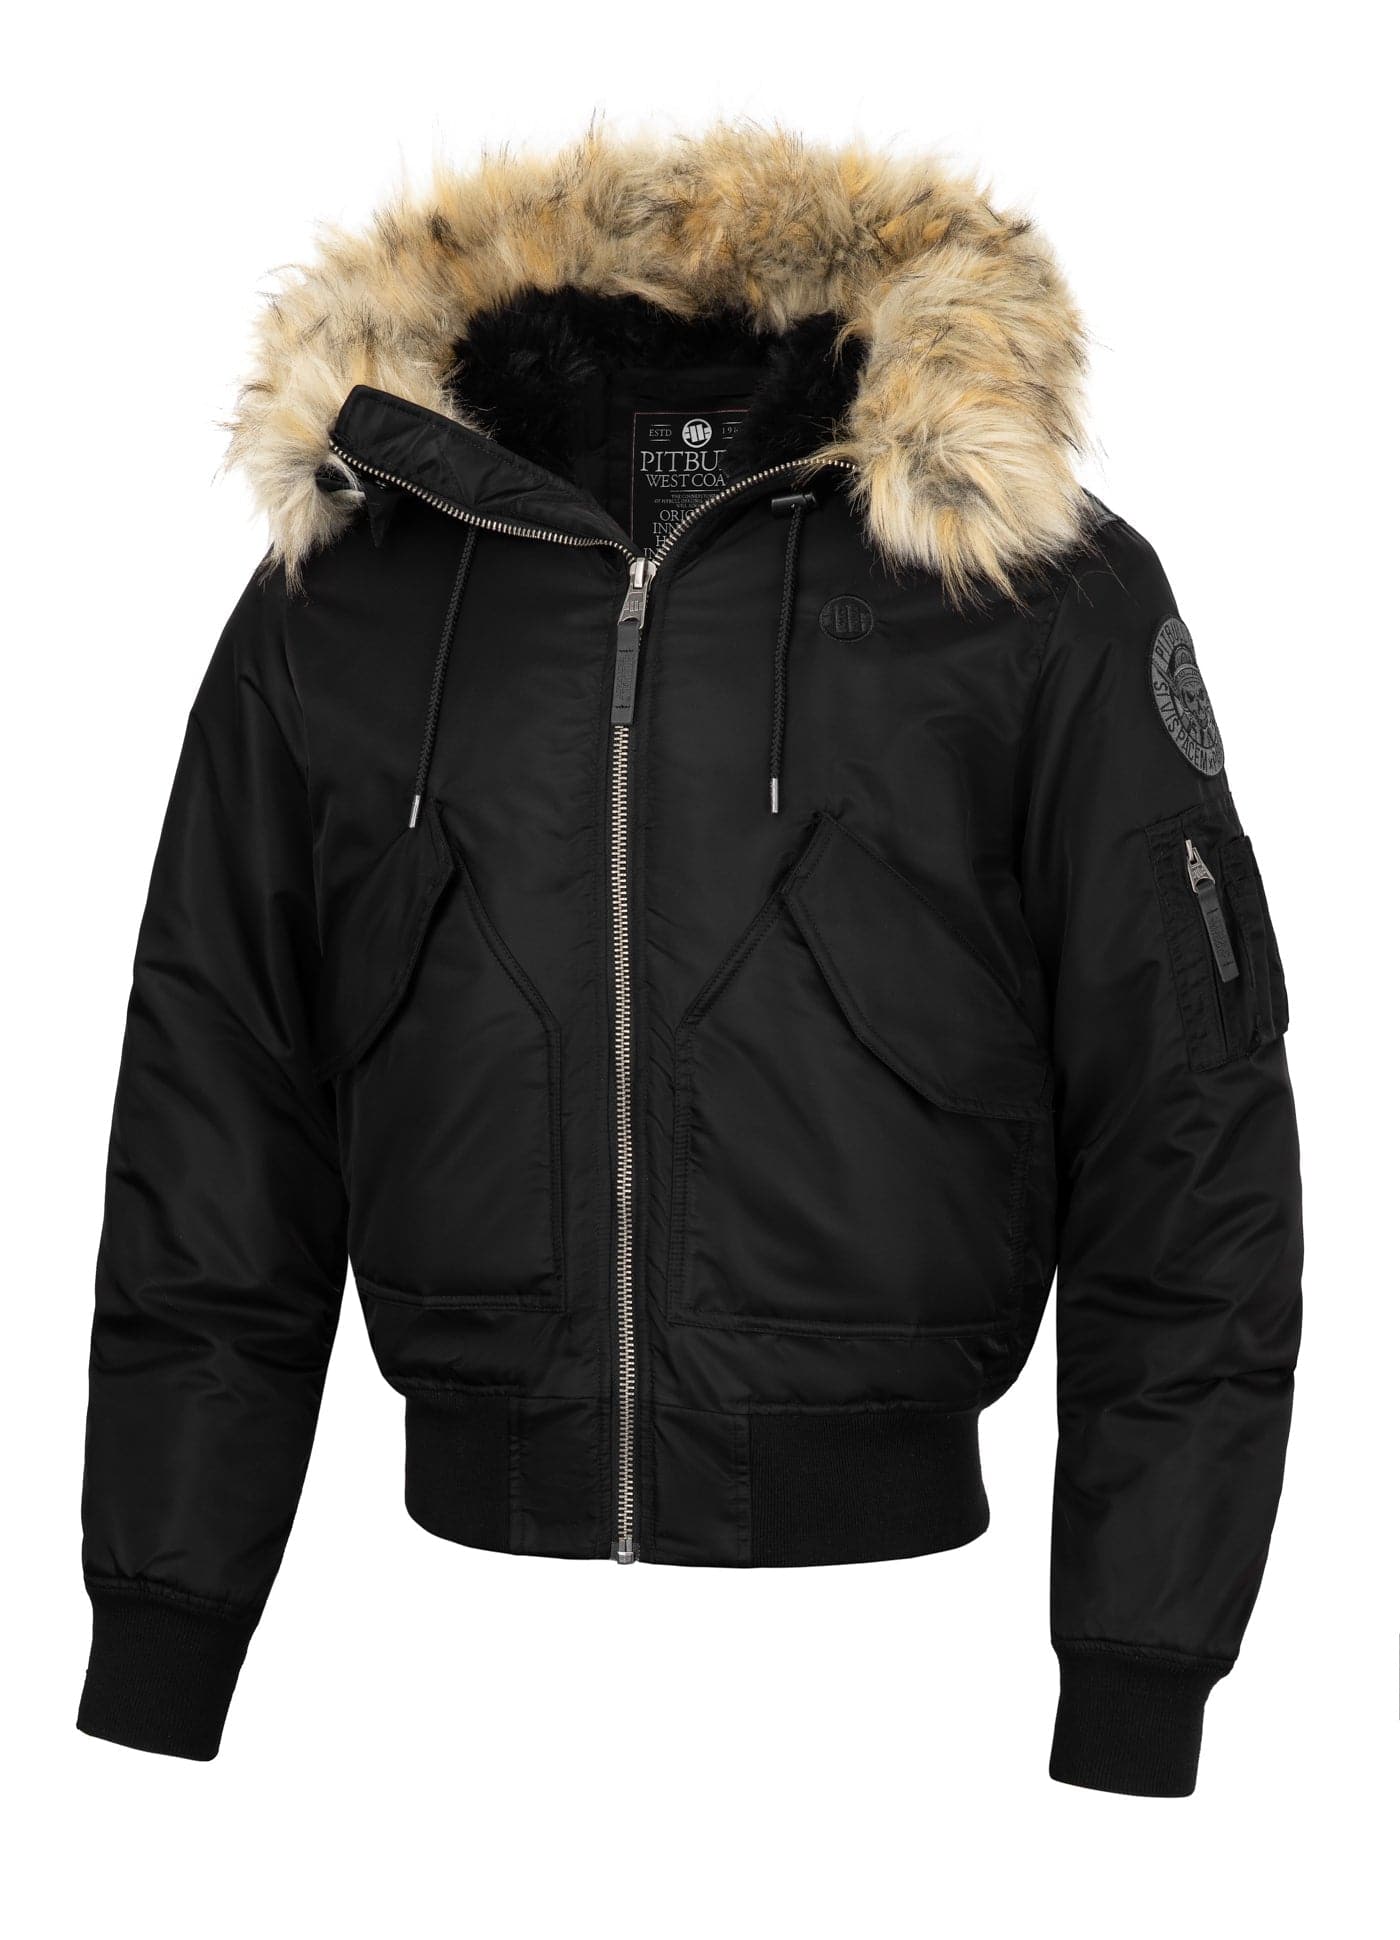 HARVEST Black Winter Jacket